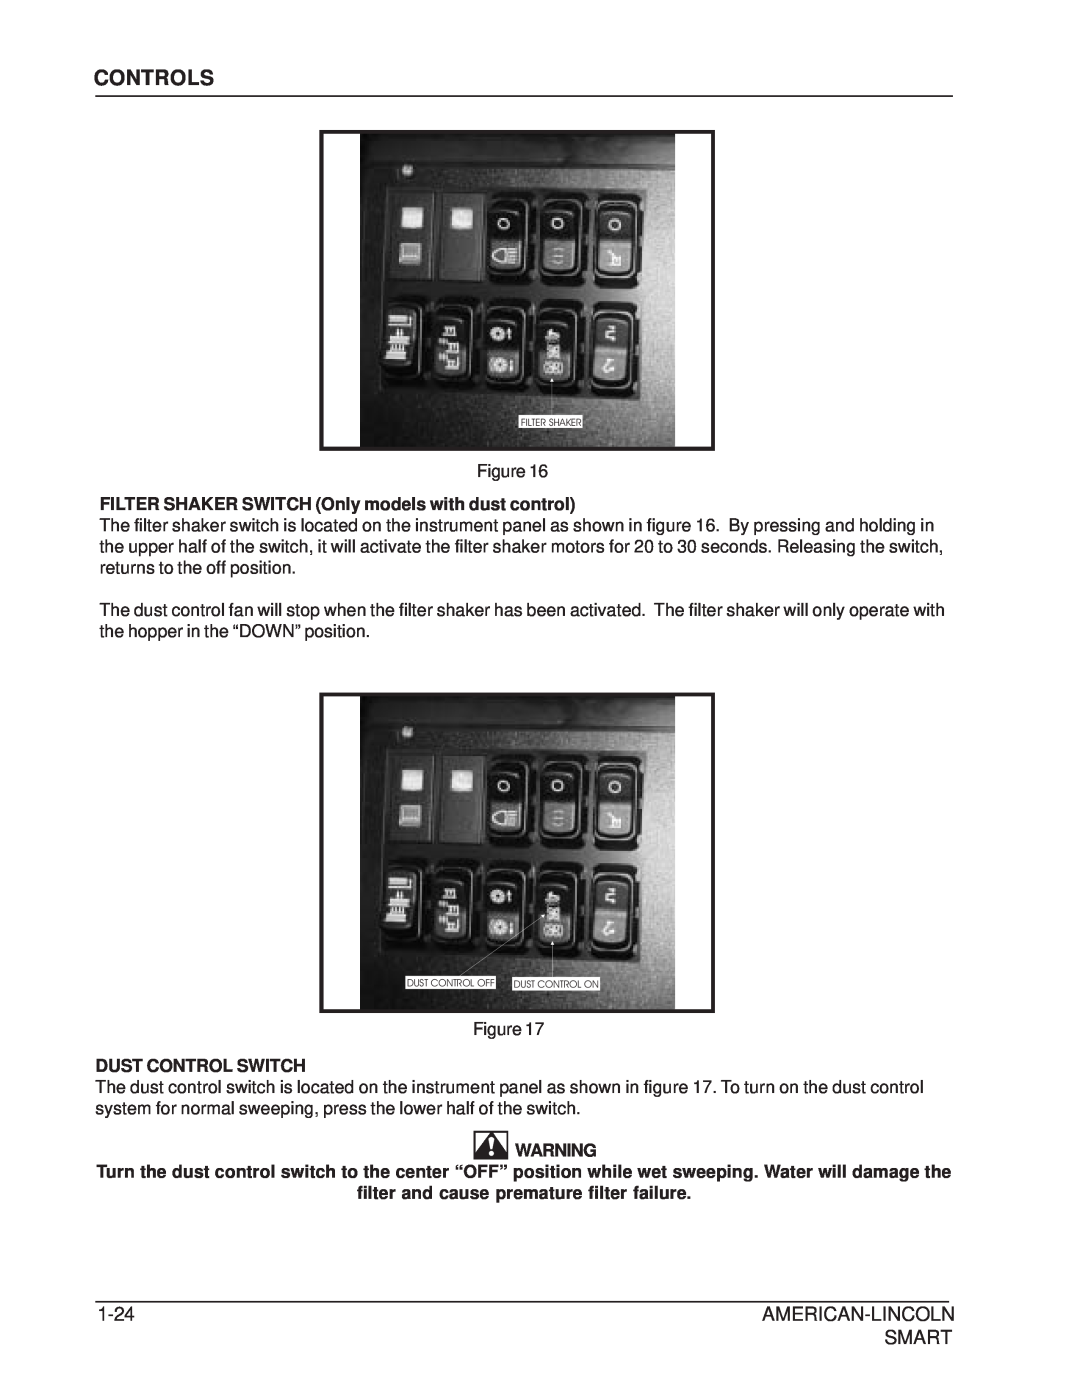 Nilfisk-ALTO 692003 manual Controls, 1-24, American-Lincoln, Smart, Dust Control Switch 